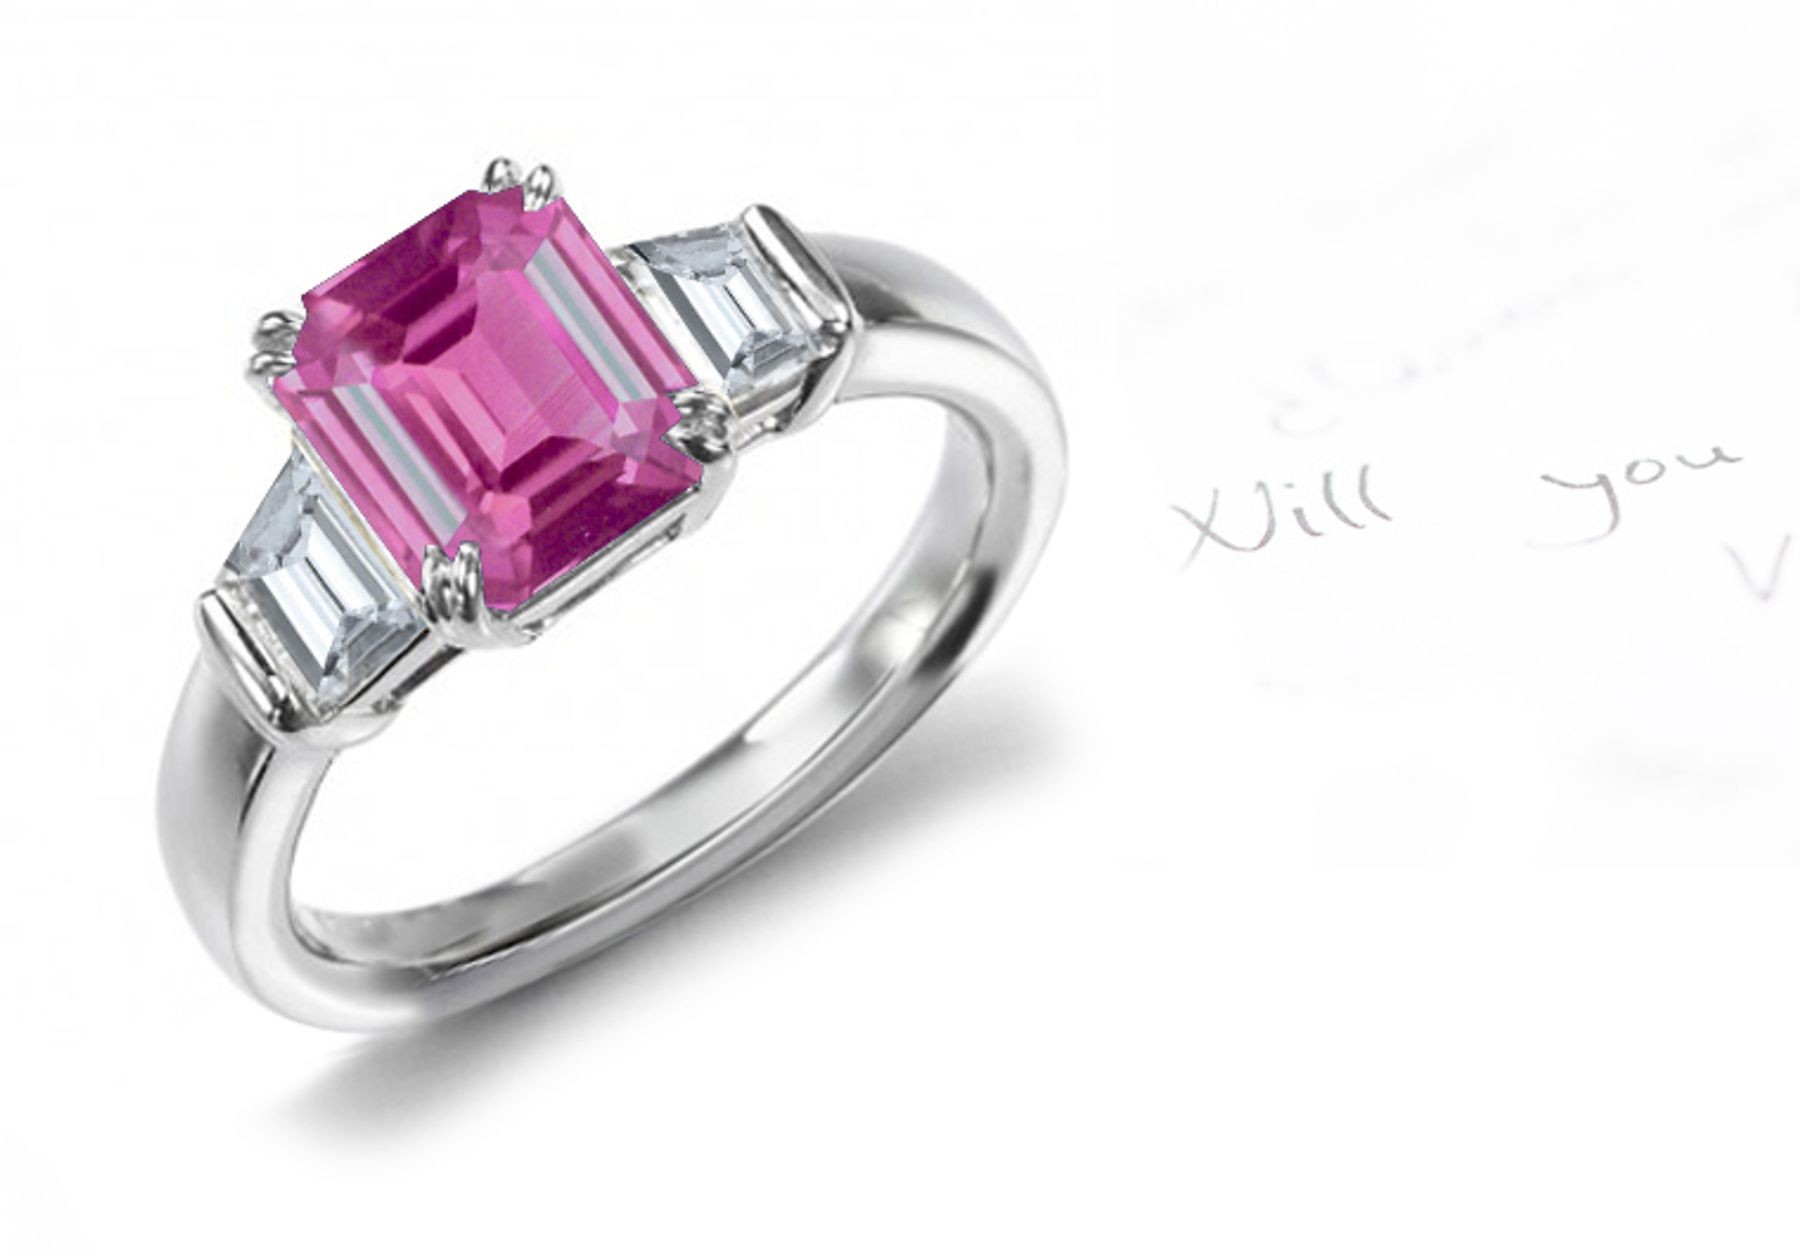 Sea of Satalia Gallery: Emerald Cut Pink Sapphire & Trapezoid White Diamonds Gold Ring